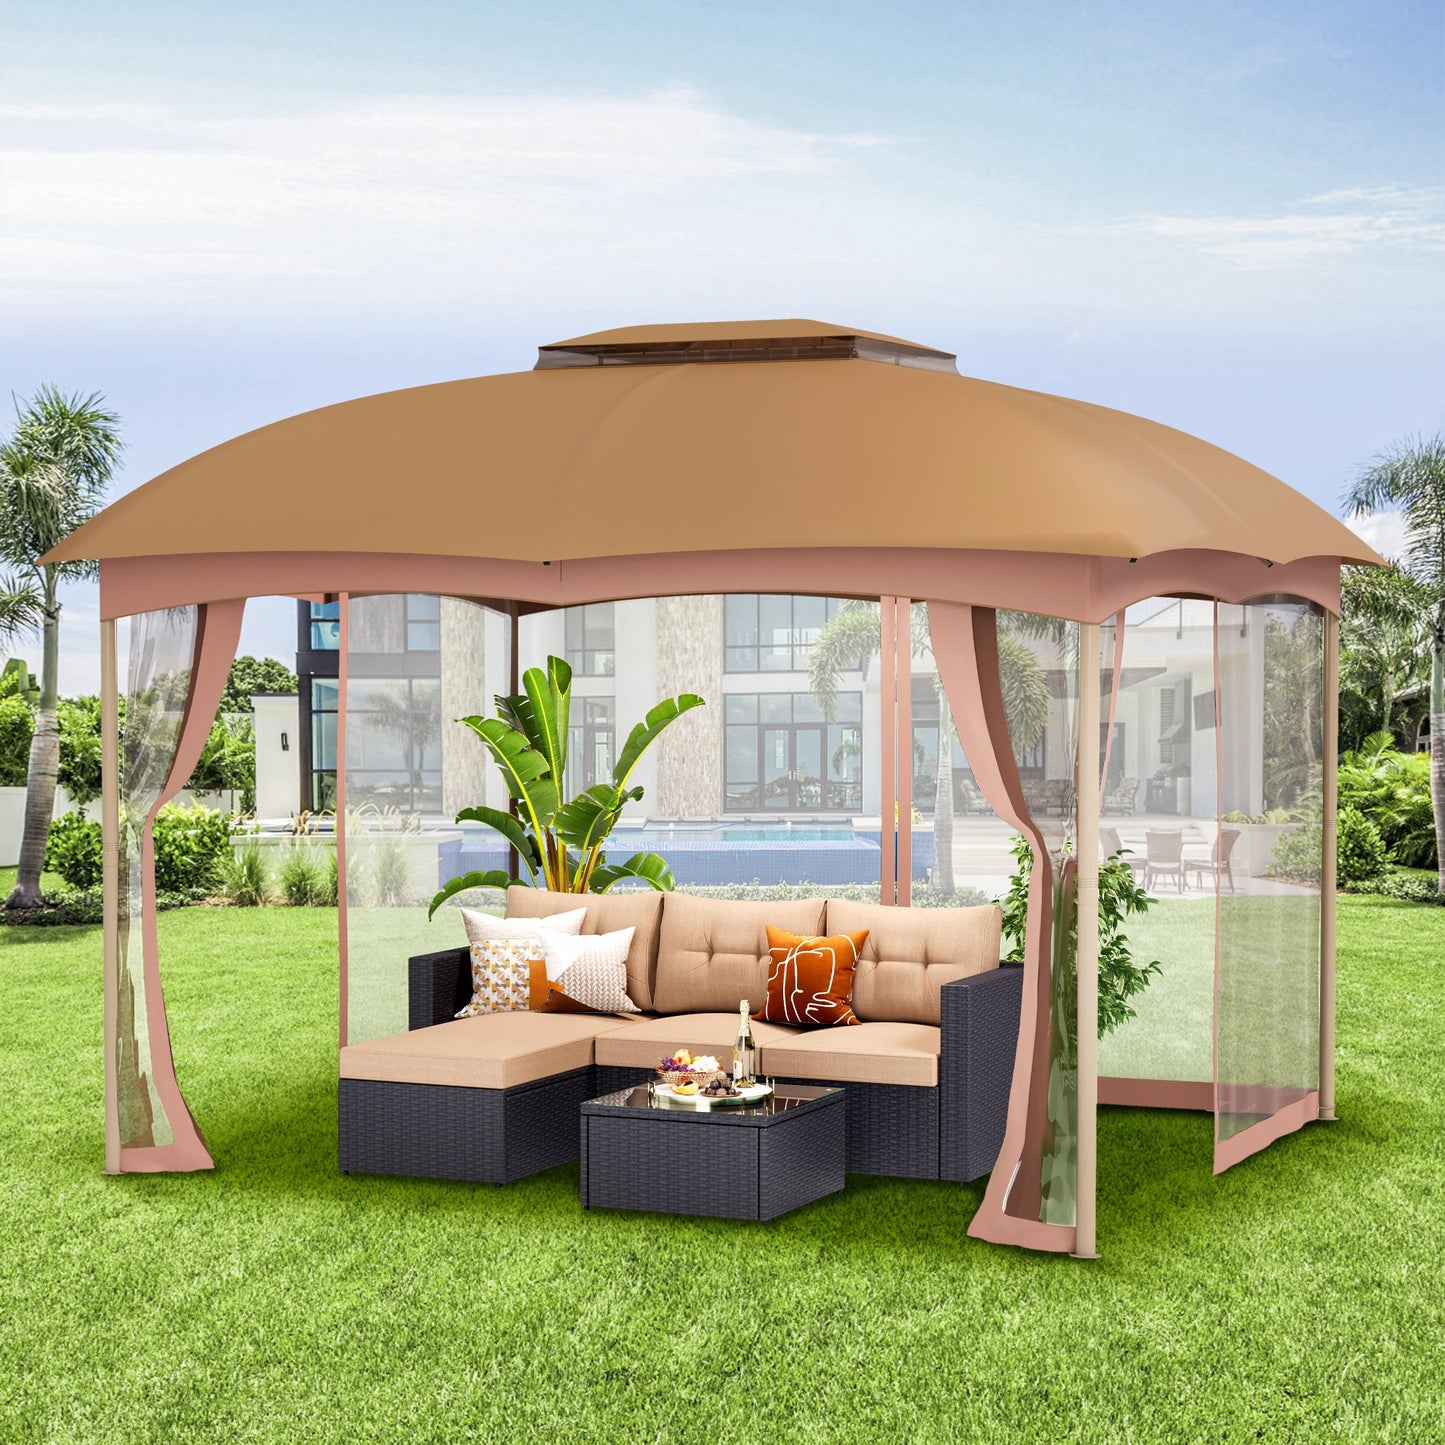 Sophia & William 10' x 12' Outdoor Gazebo Canopy Tent with Mesh Netting Sidewalls